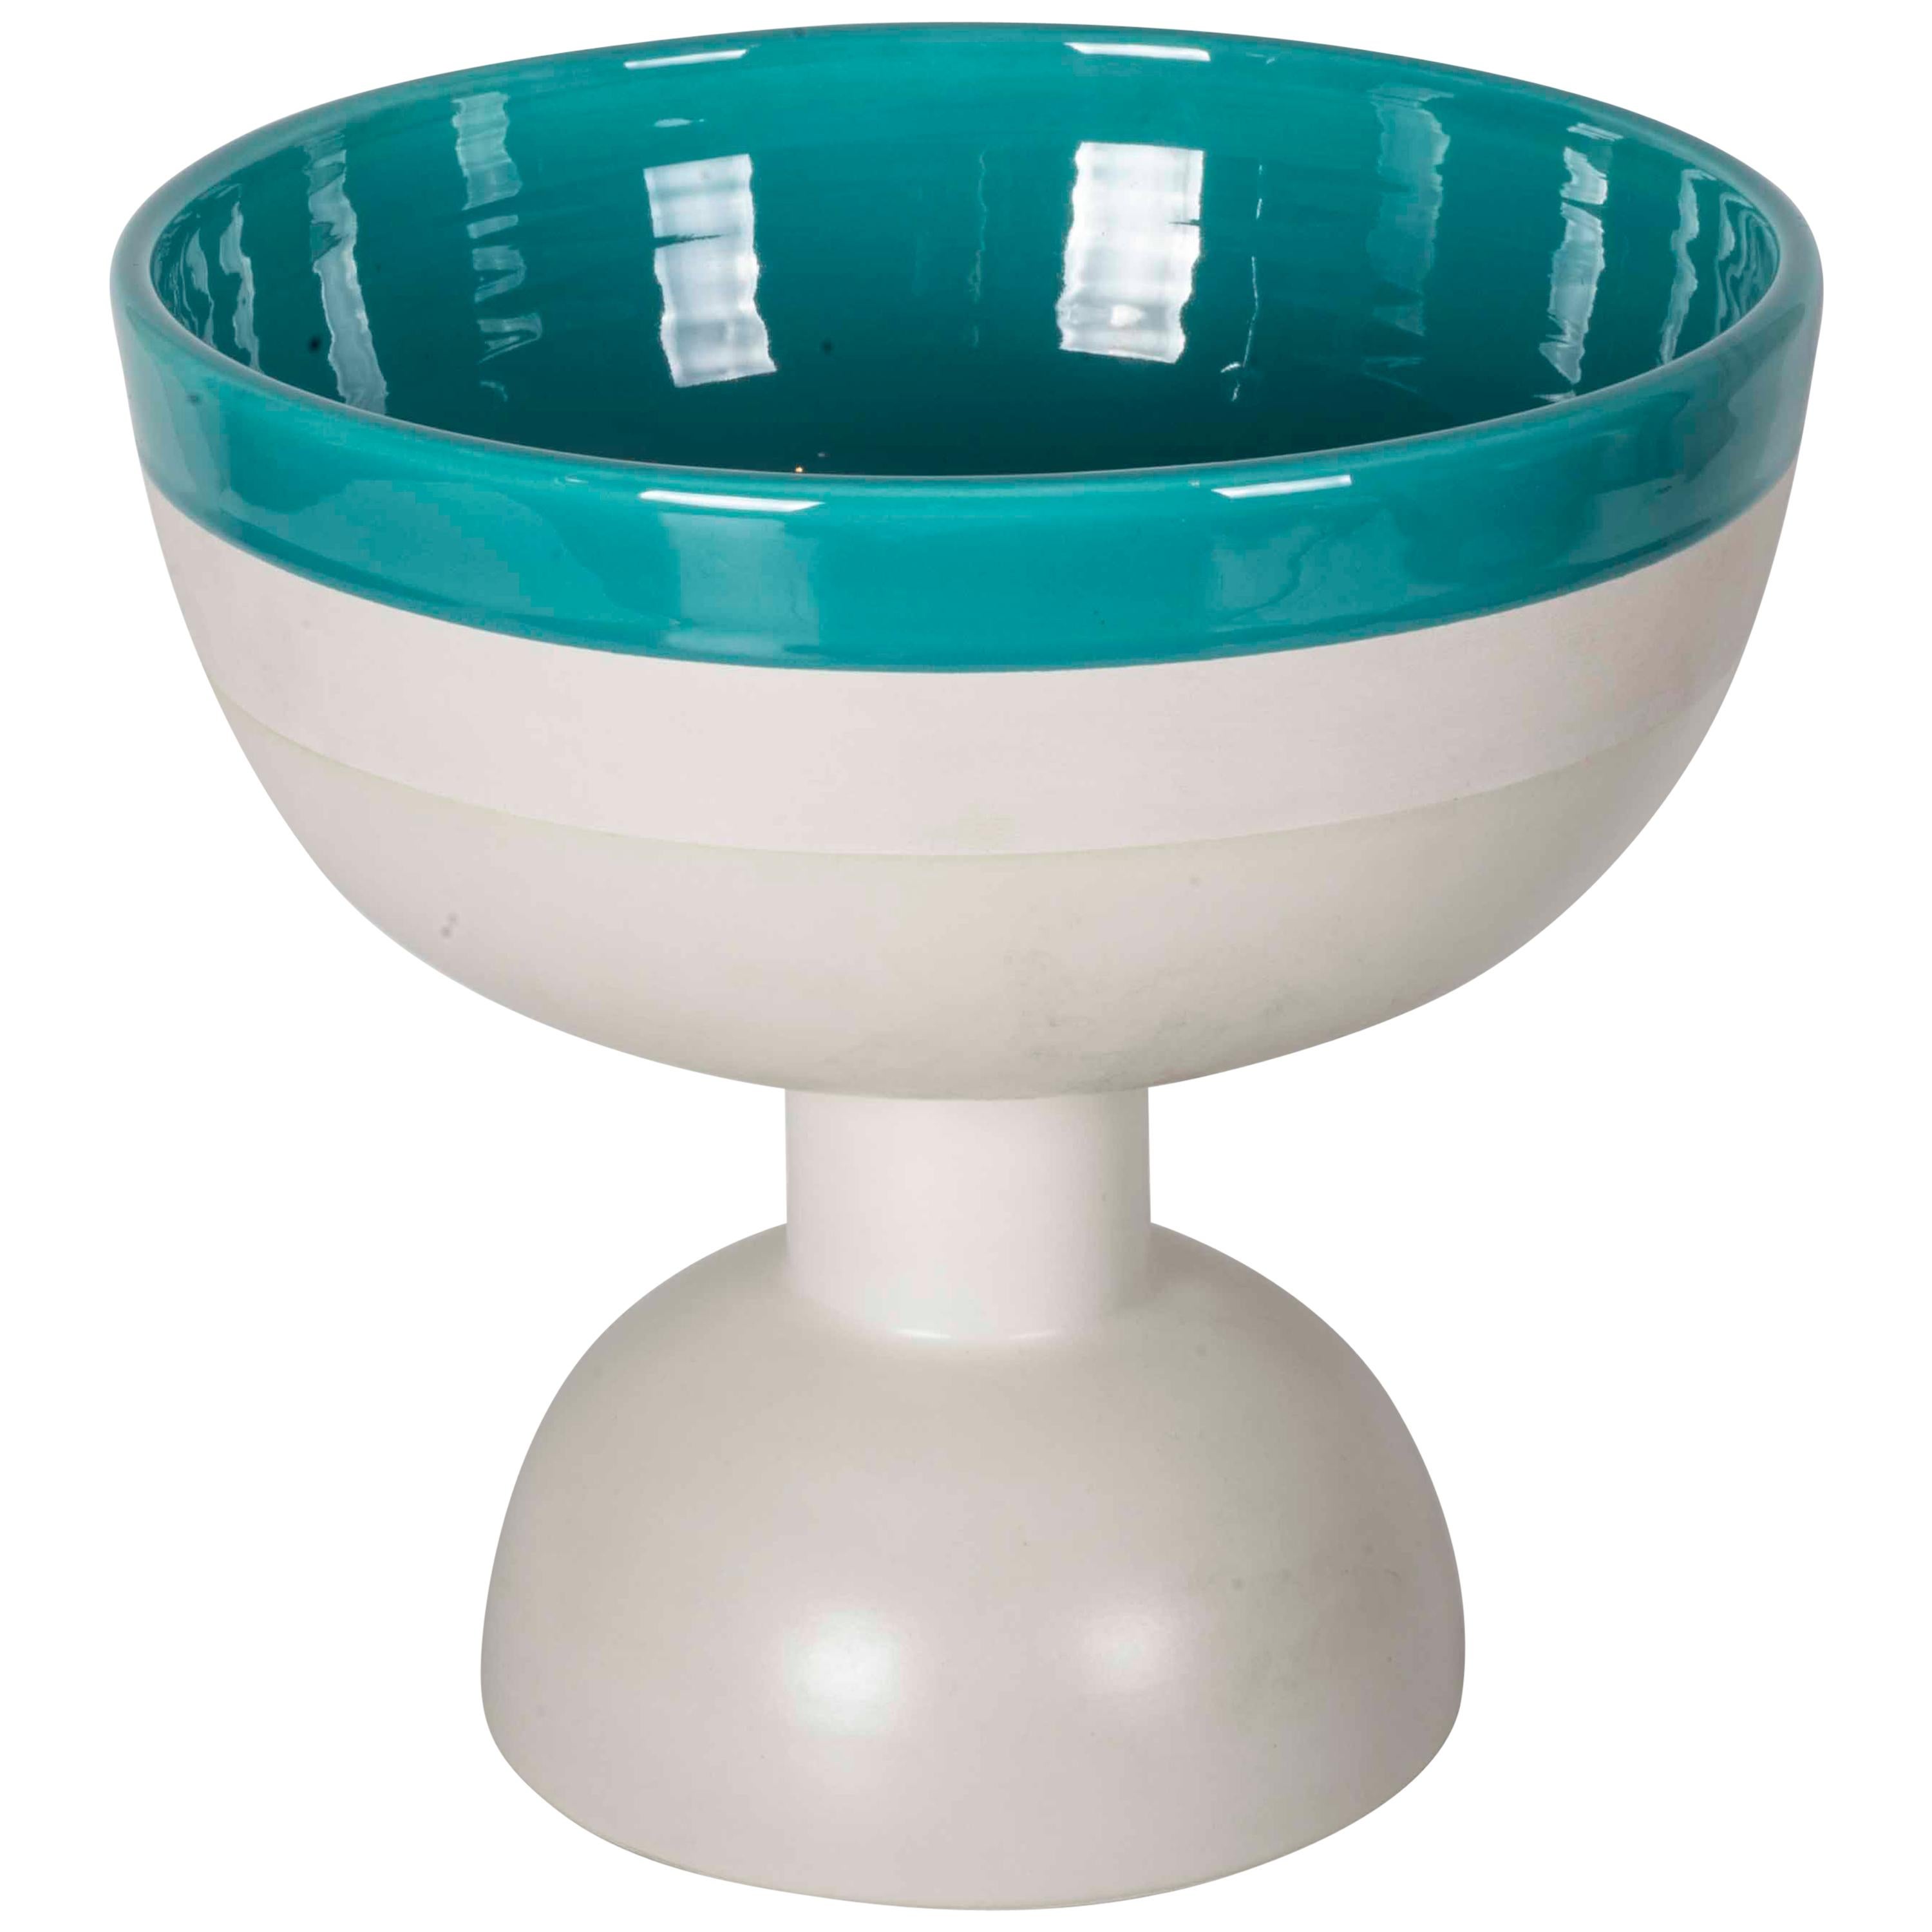 Ettore Sottsass Green and White Ceramic Vase "Bolo Bowl" For Sale